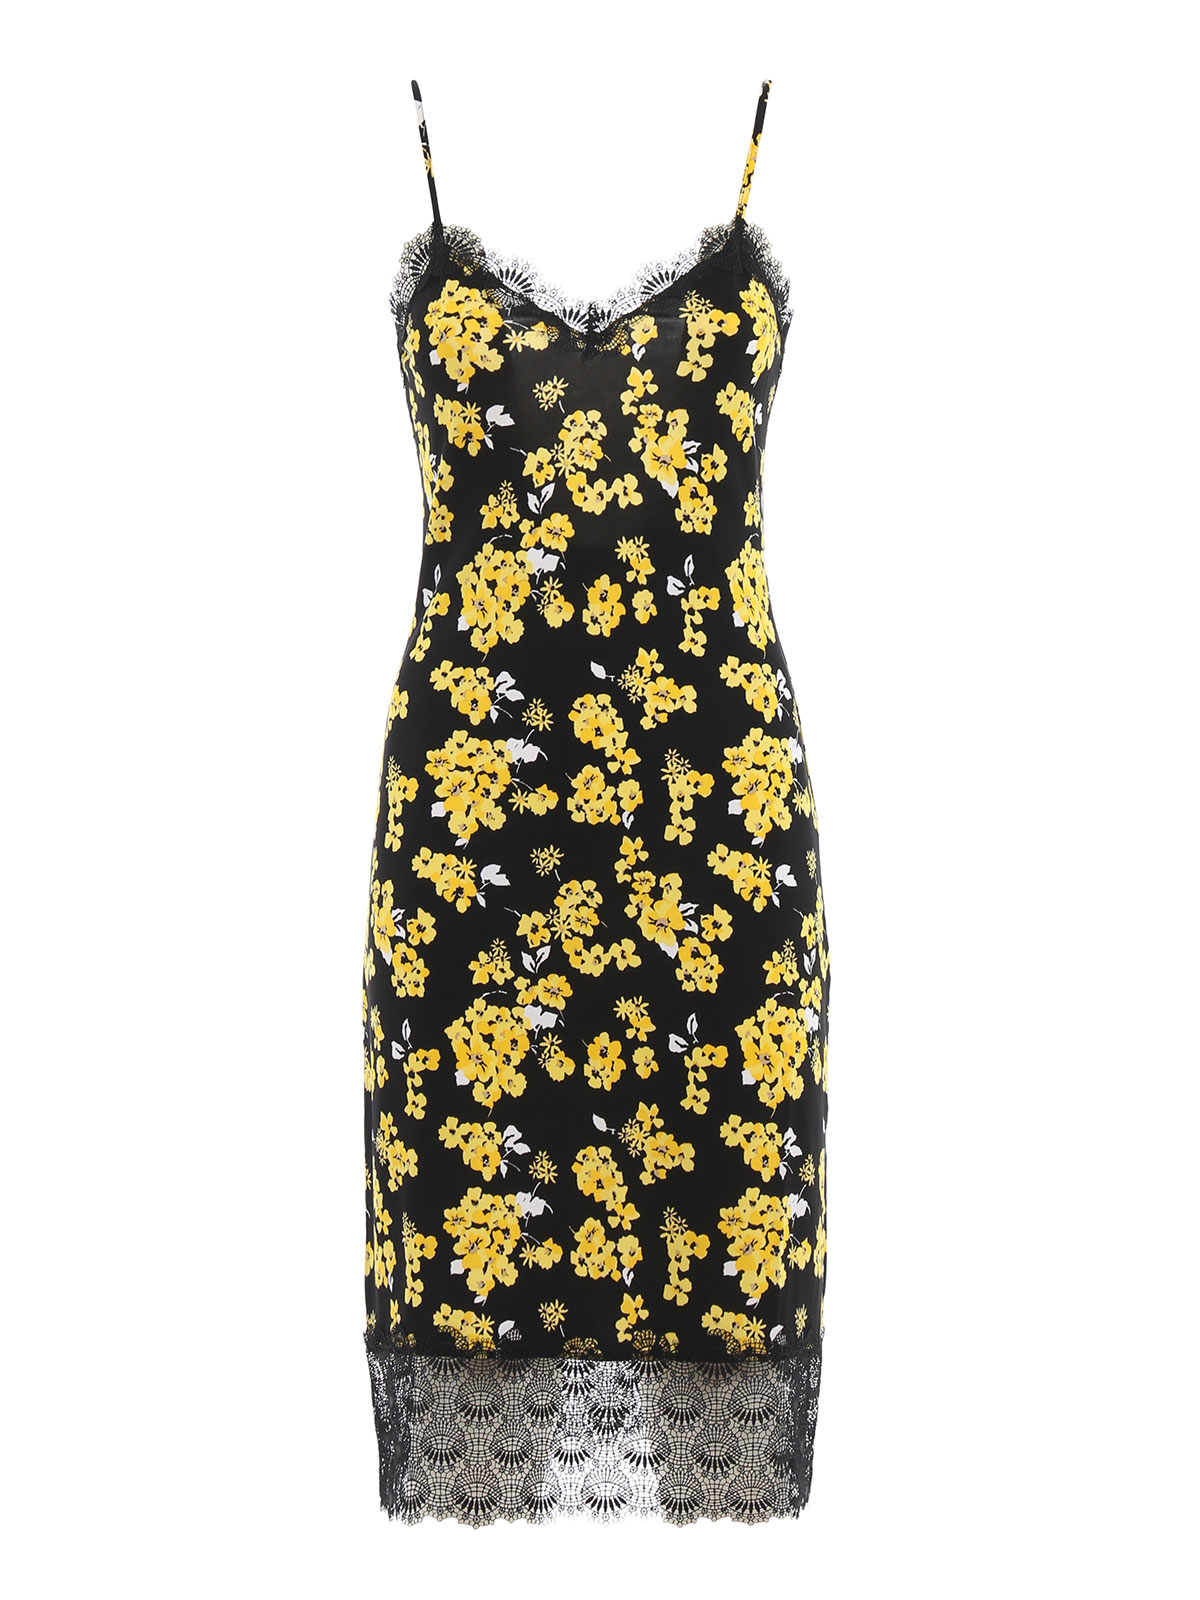 michael kors yellow floral dress